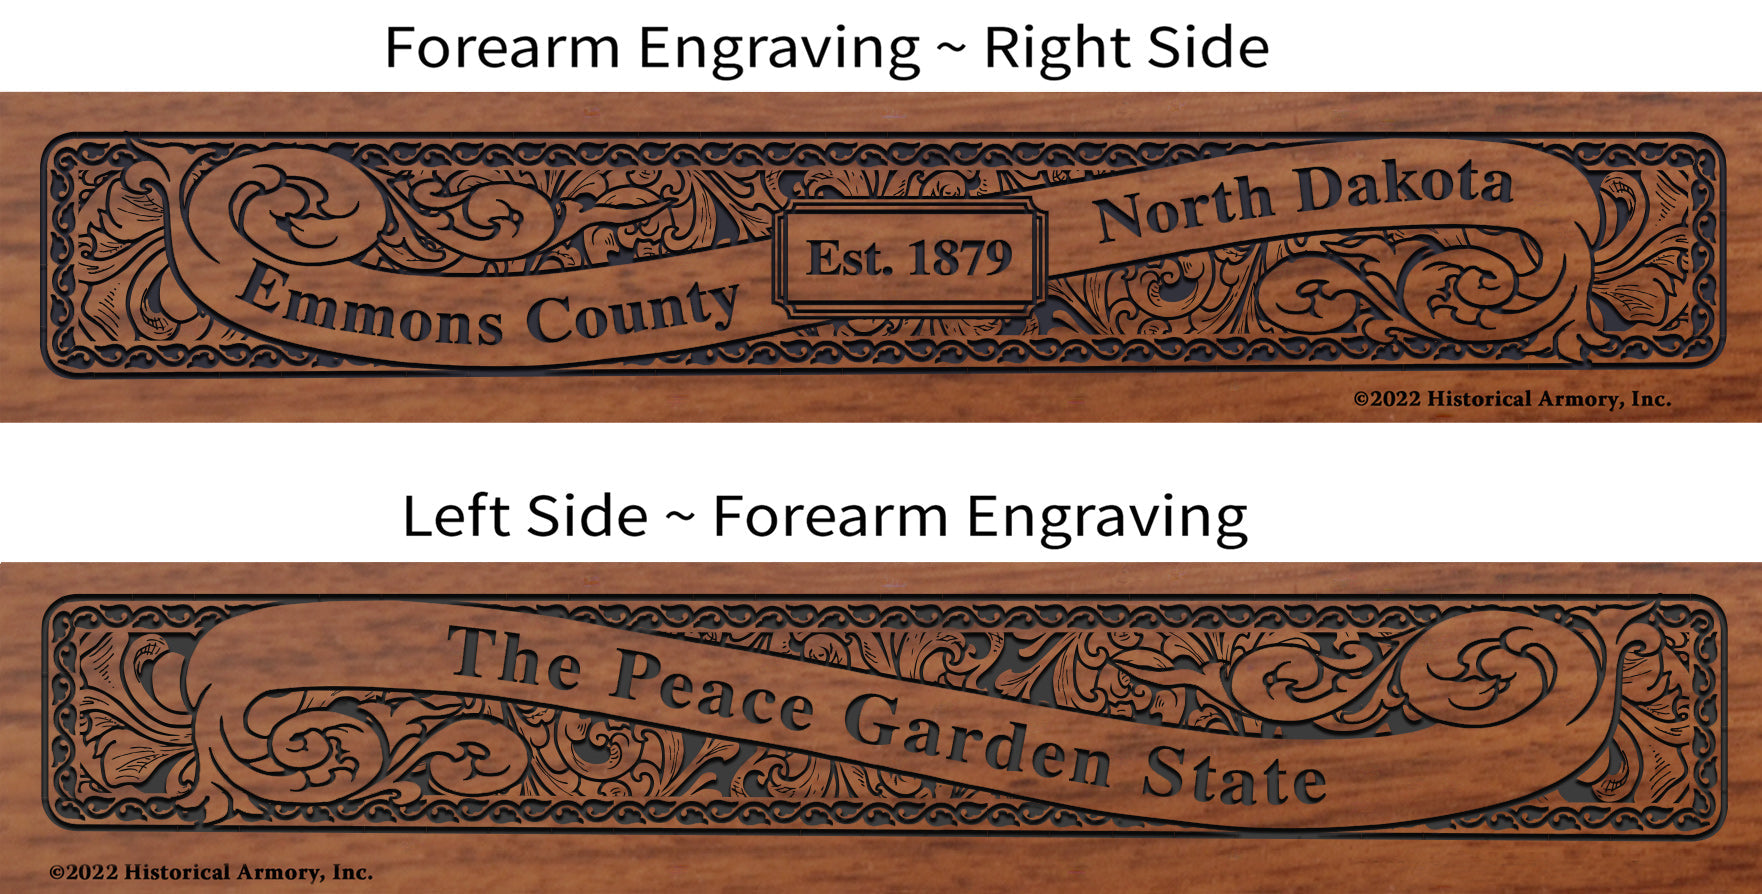 Emmons County North Dakota Engraved Rifle Forearm